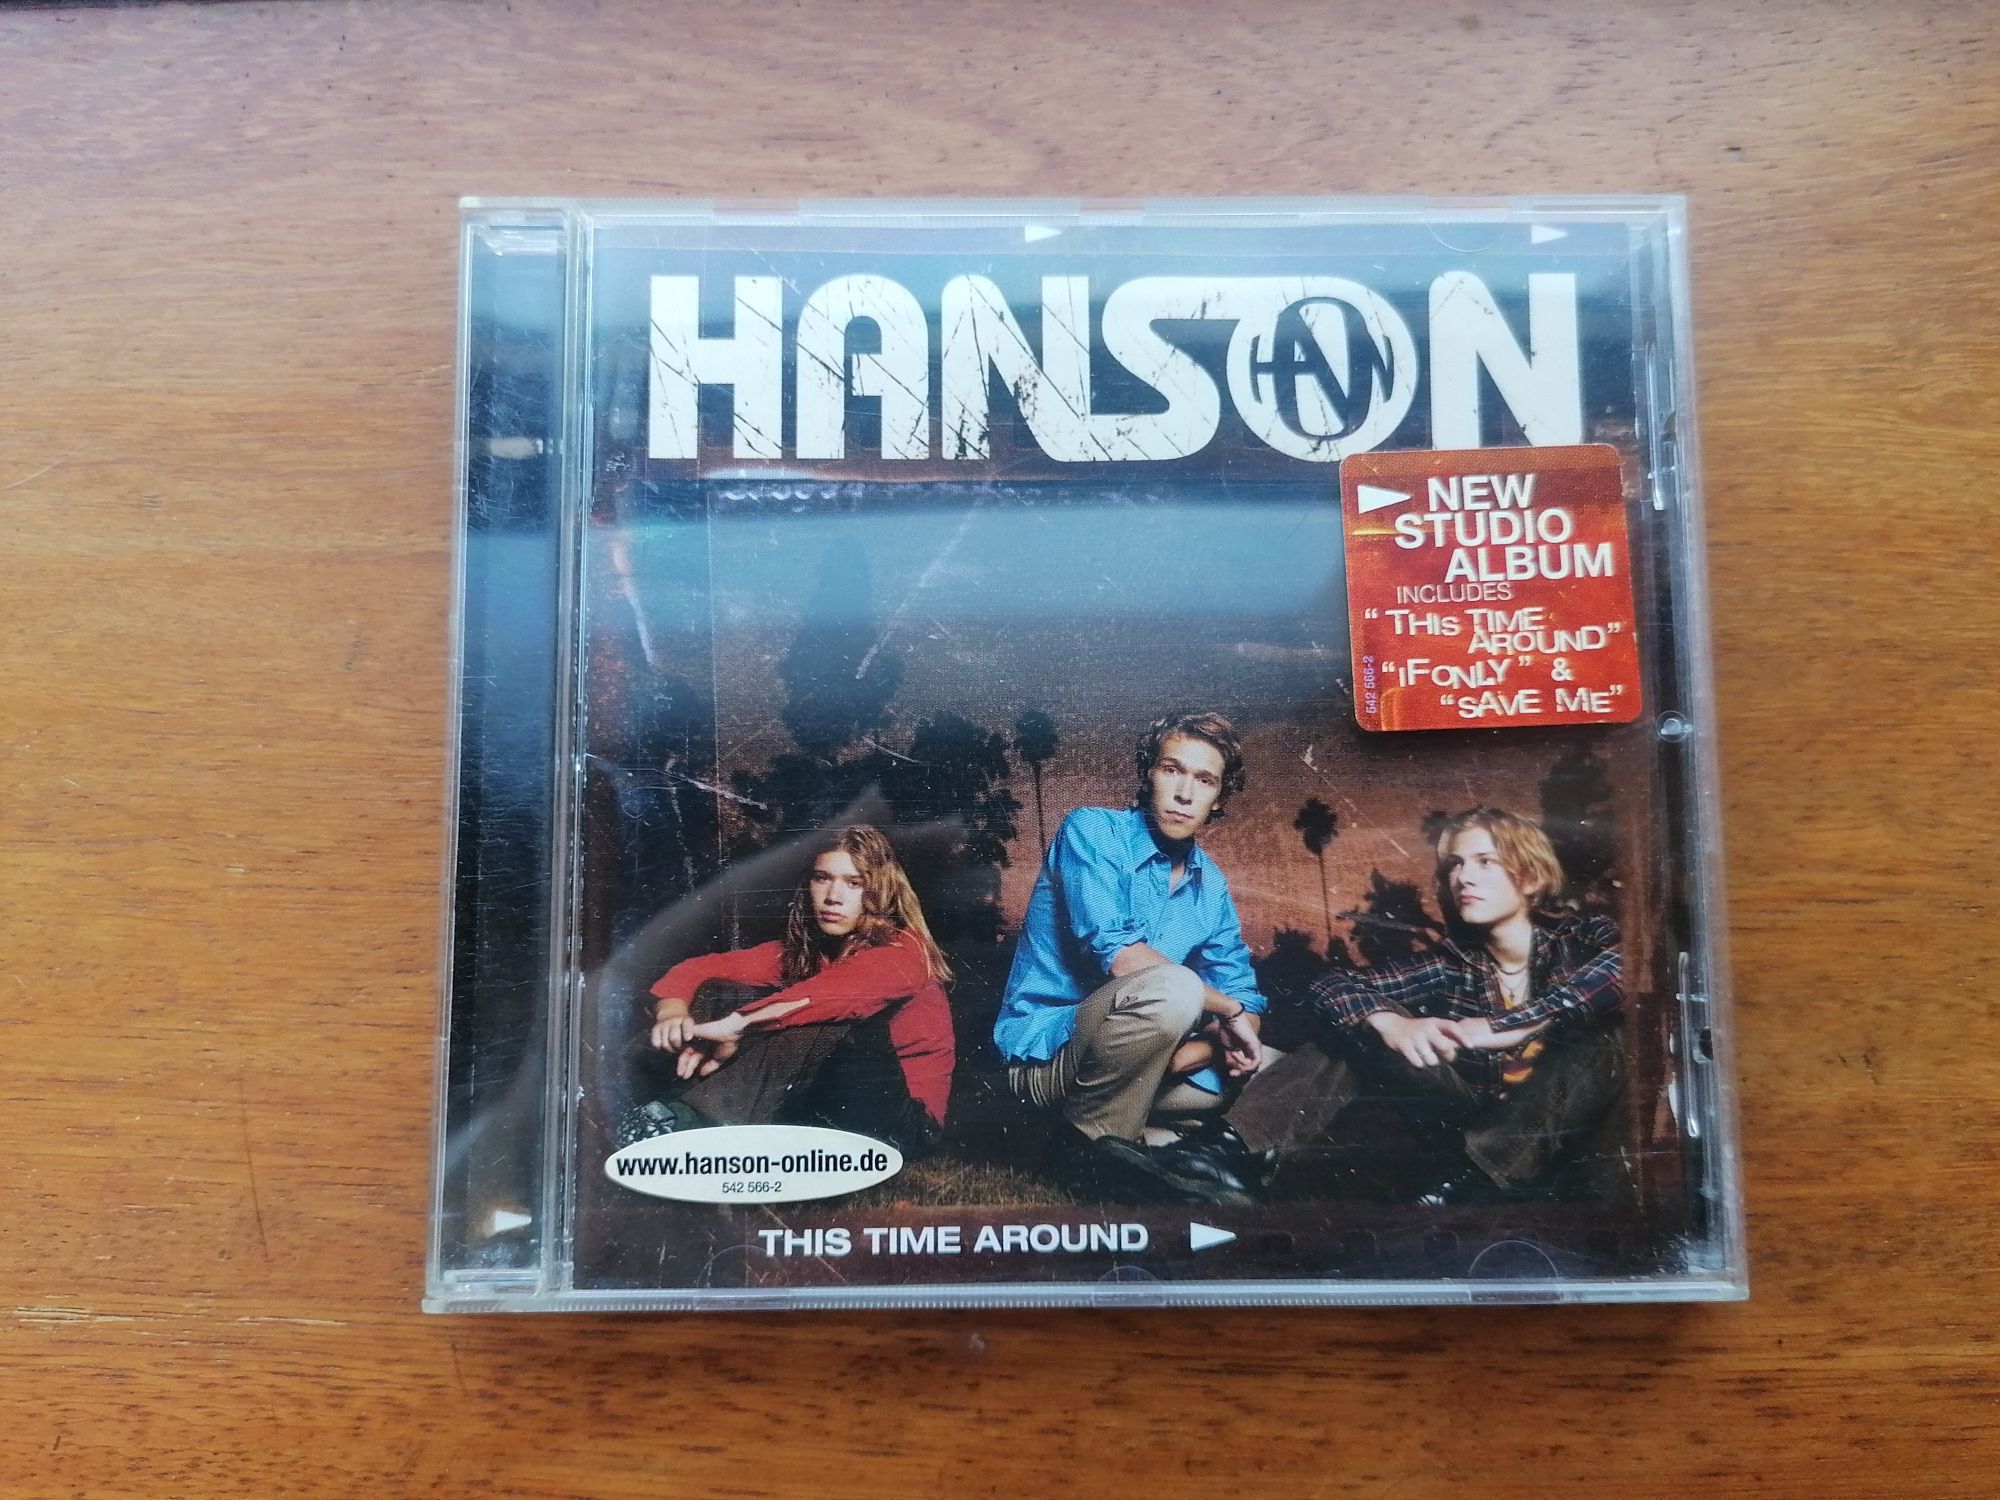 CD Hanson "This time around"